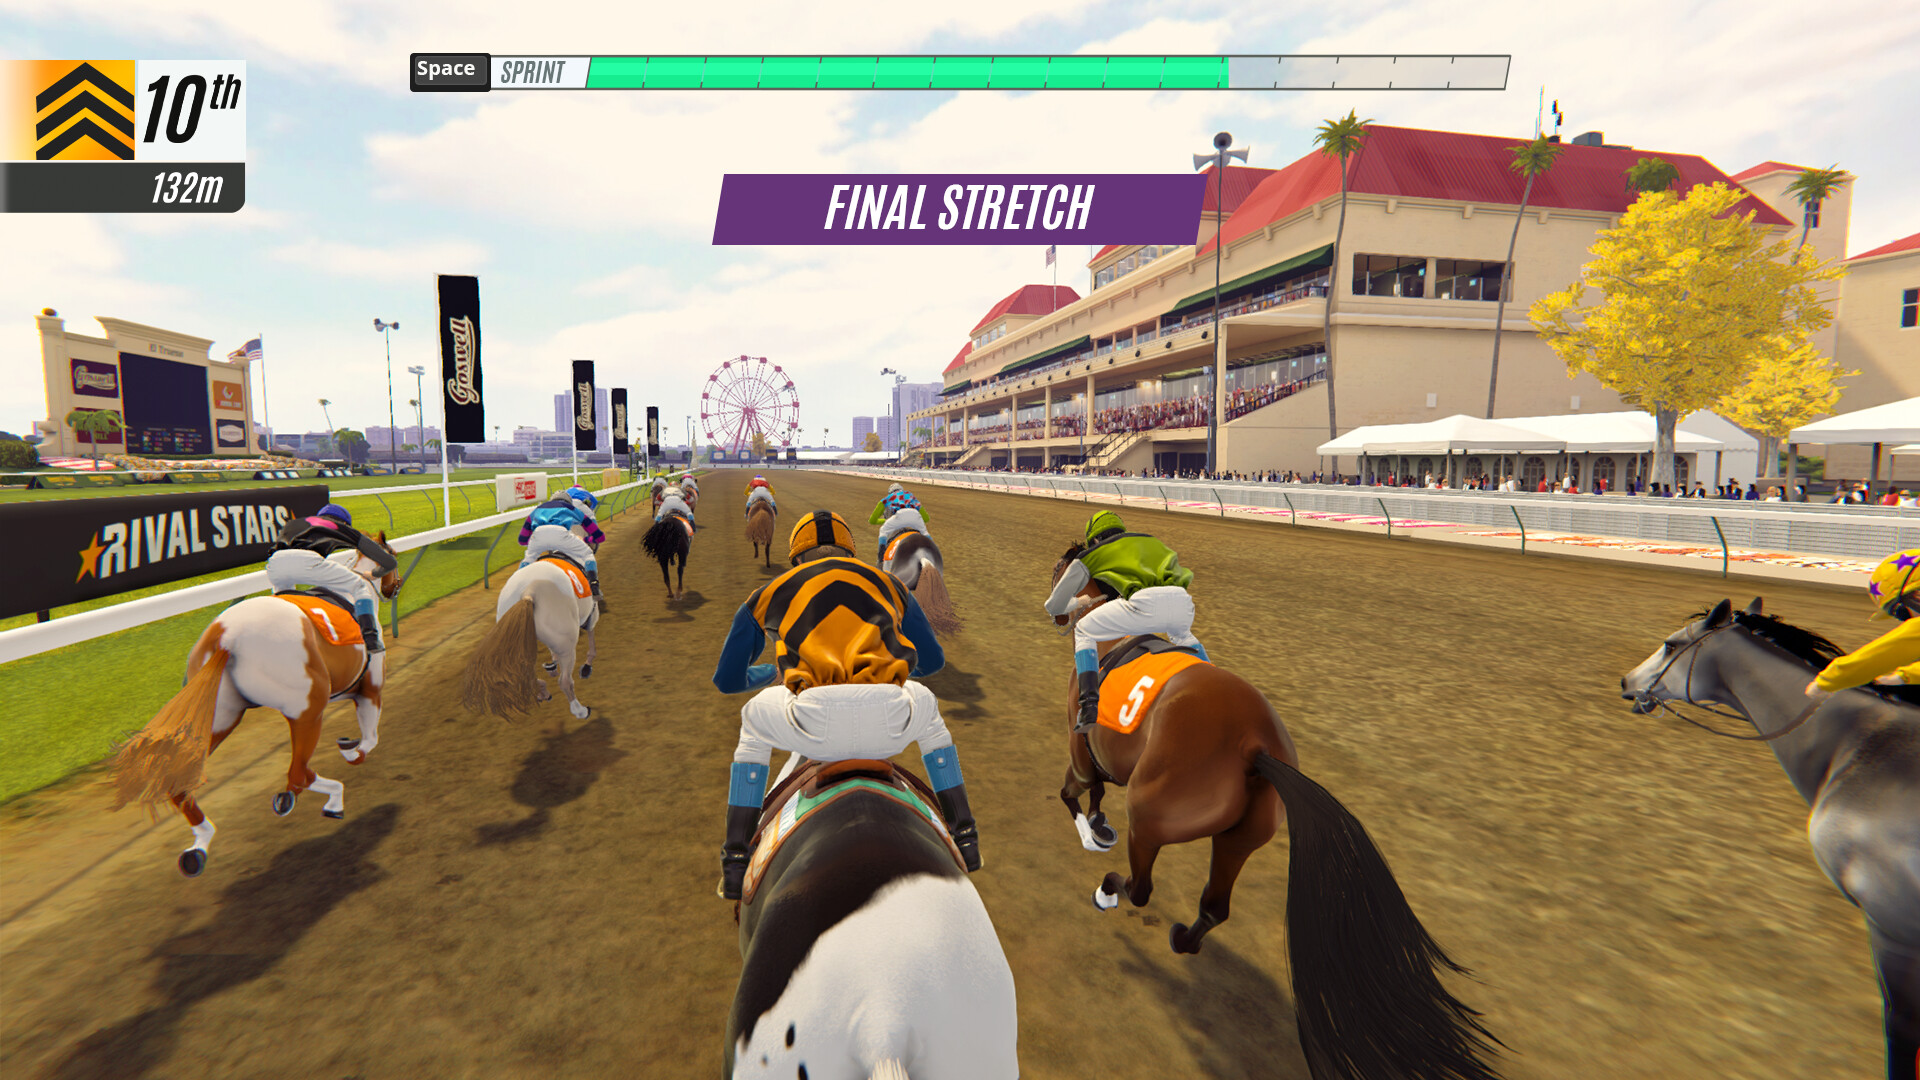 Baixe Rival Stars Horse Racing no PC com MEmu